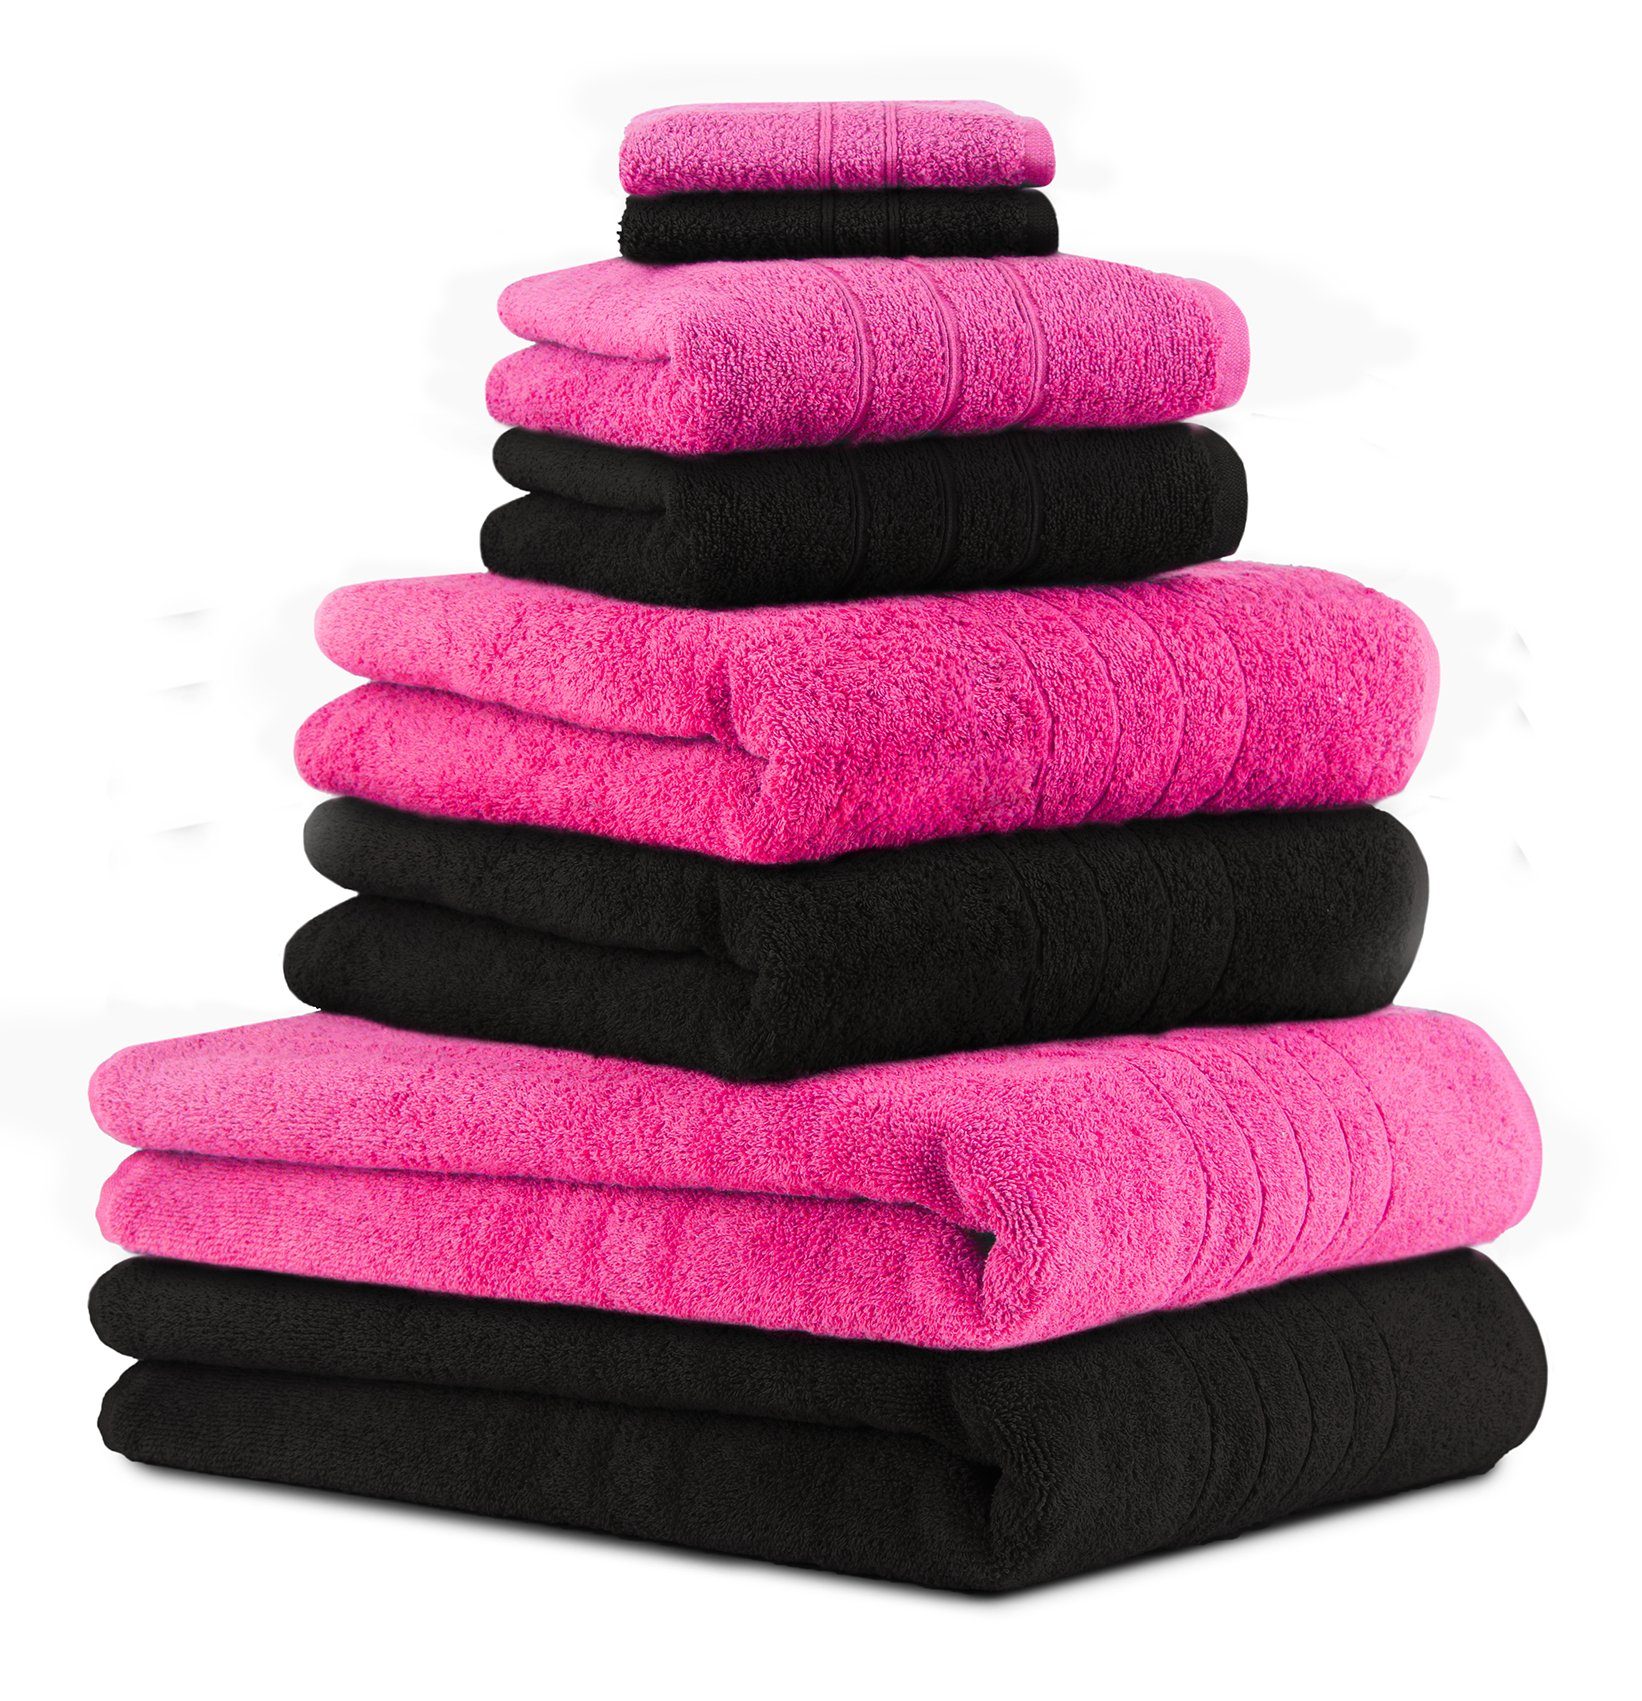 Betz Handtuch Set 8-TLG. Handtuch-Set Deluxe 100% Baumwolle 2 Badetücher 2 Duschtücher 2 Handtücher 2 Seiftücher Farbe Fuchsia und schwarz, 100% Baumwolle, (8-tlg)